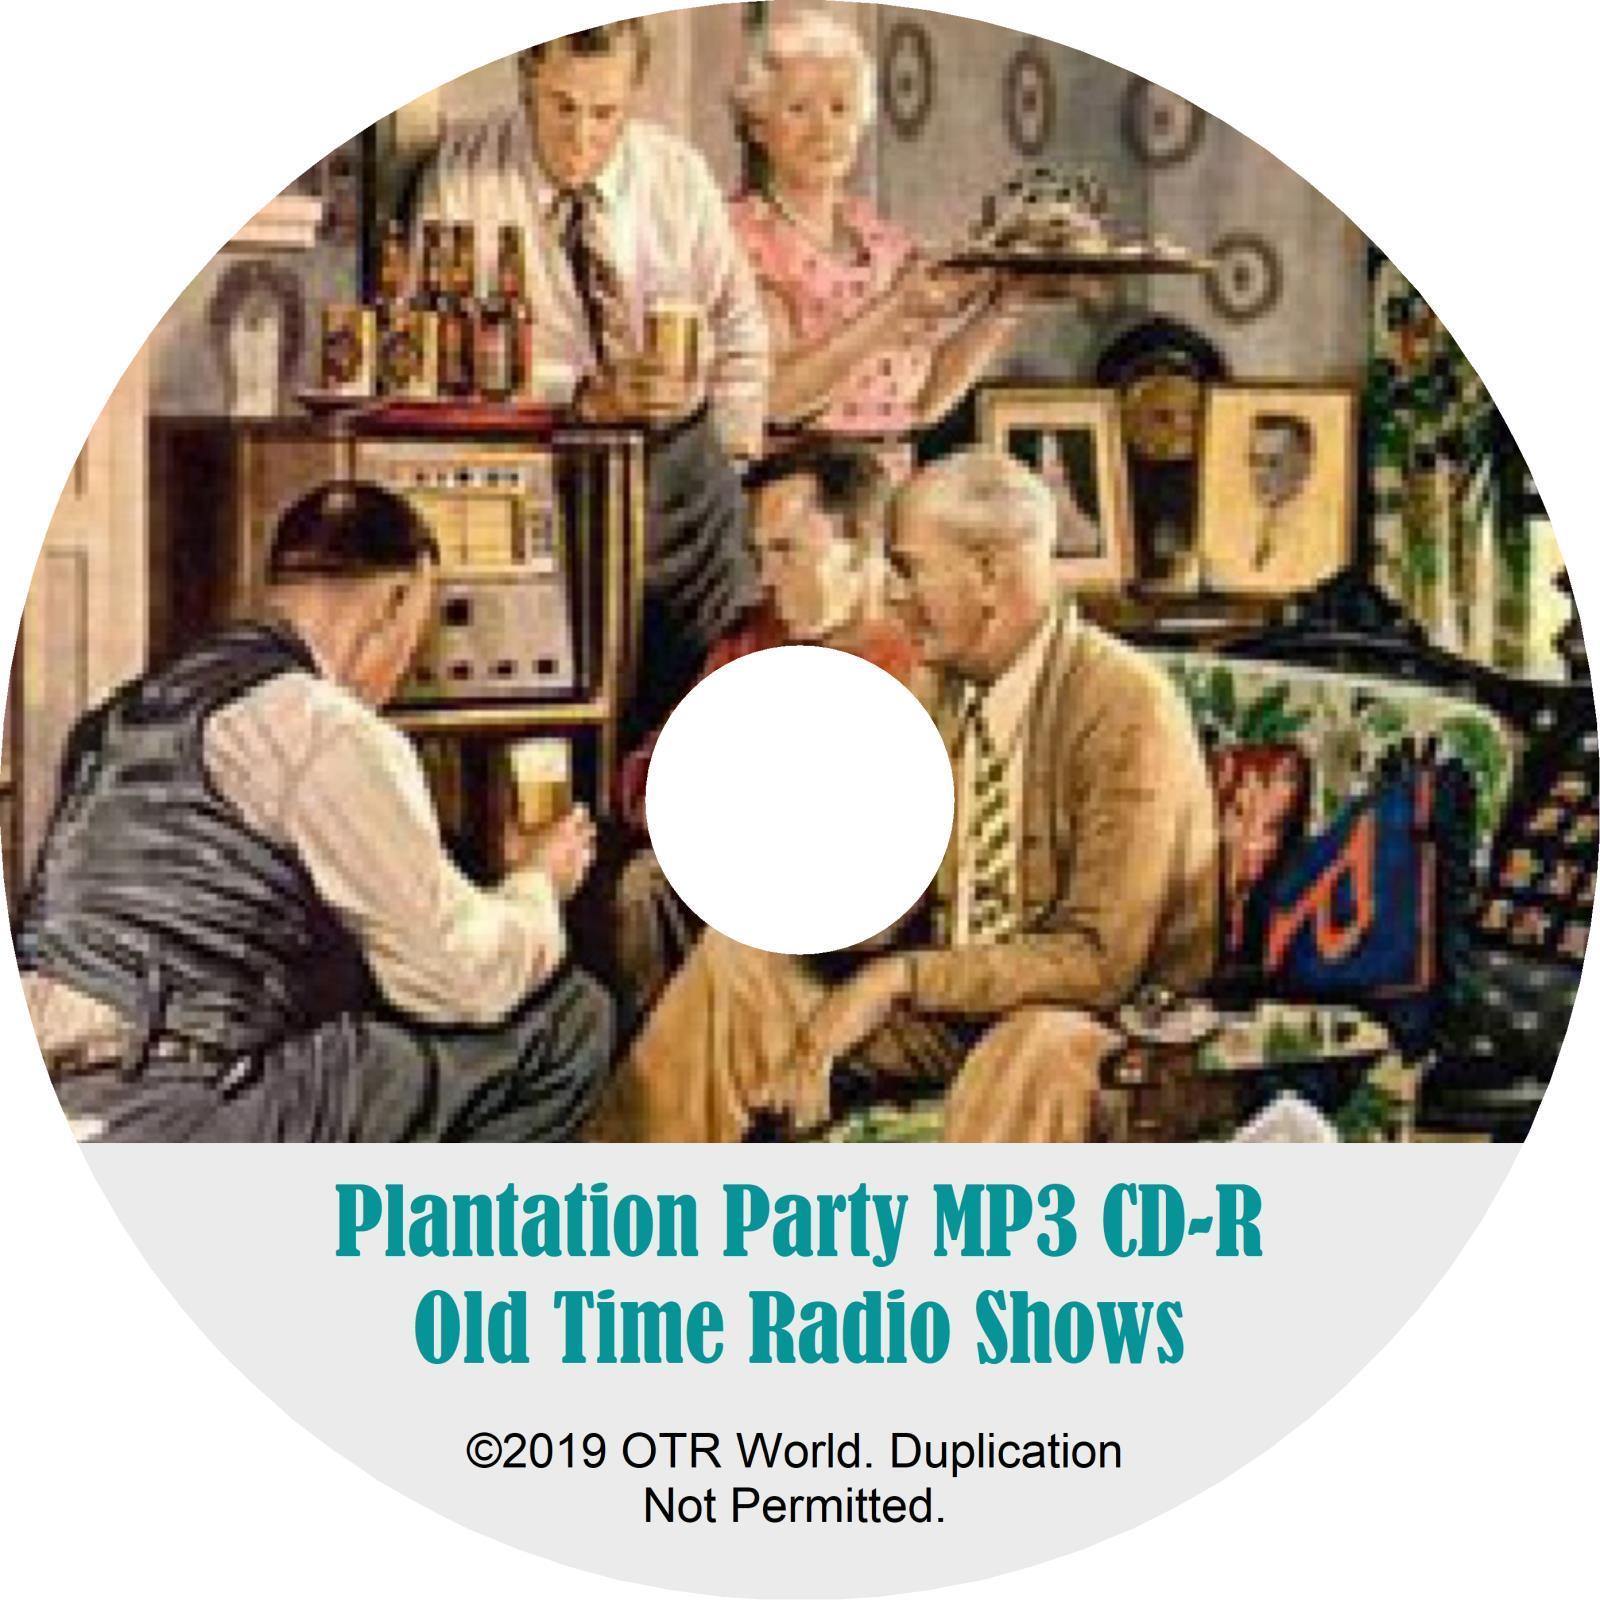 Plantation Party OTR Old Time Radio Shows MP3 On CD 2 Episodes - OTR World